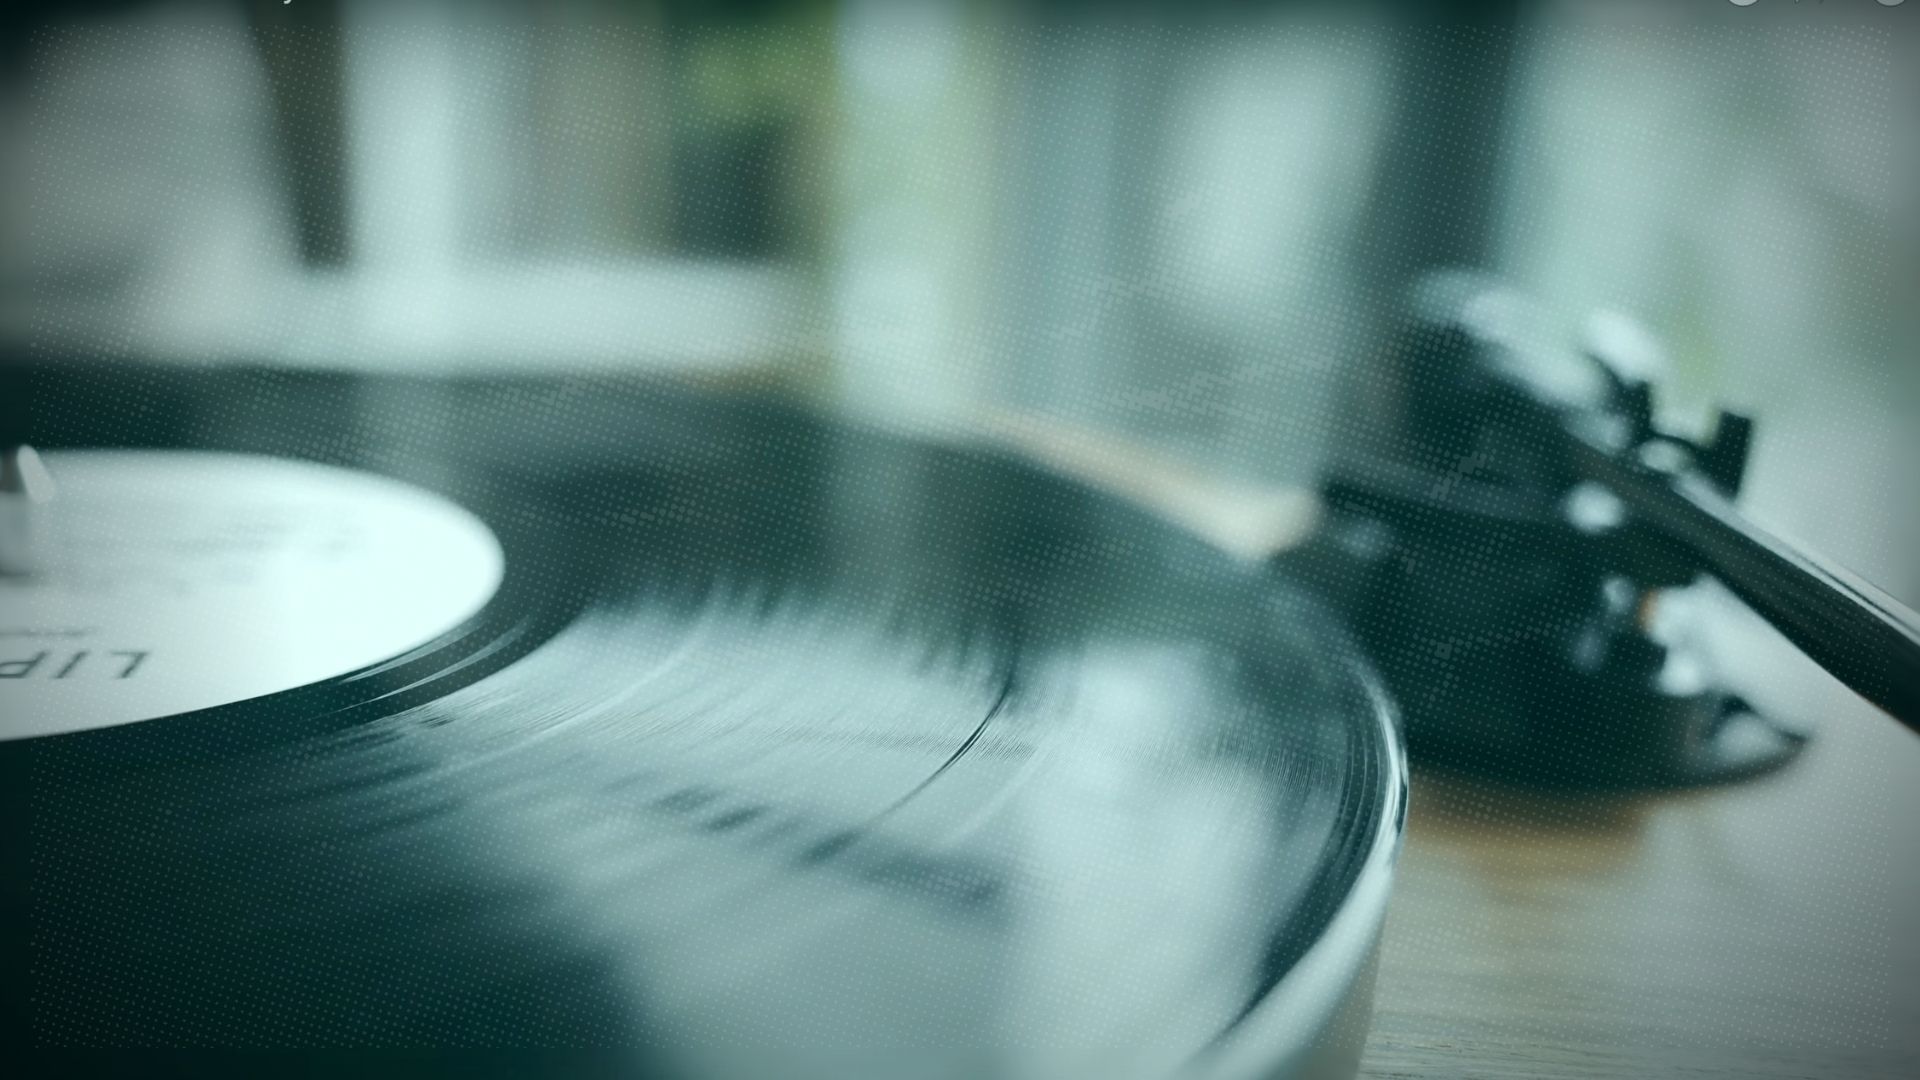 clean vinyl record closeup on turntable